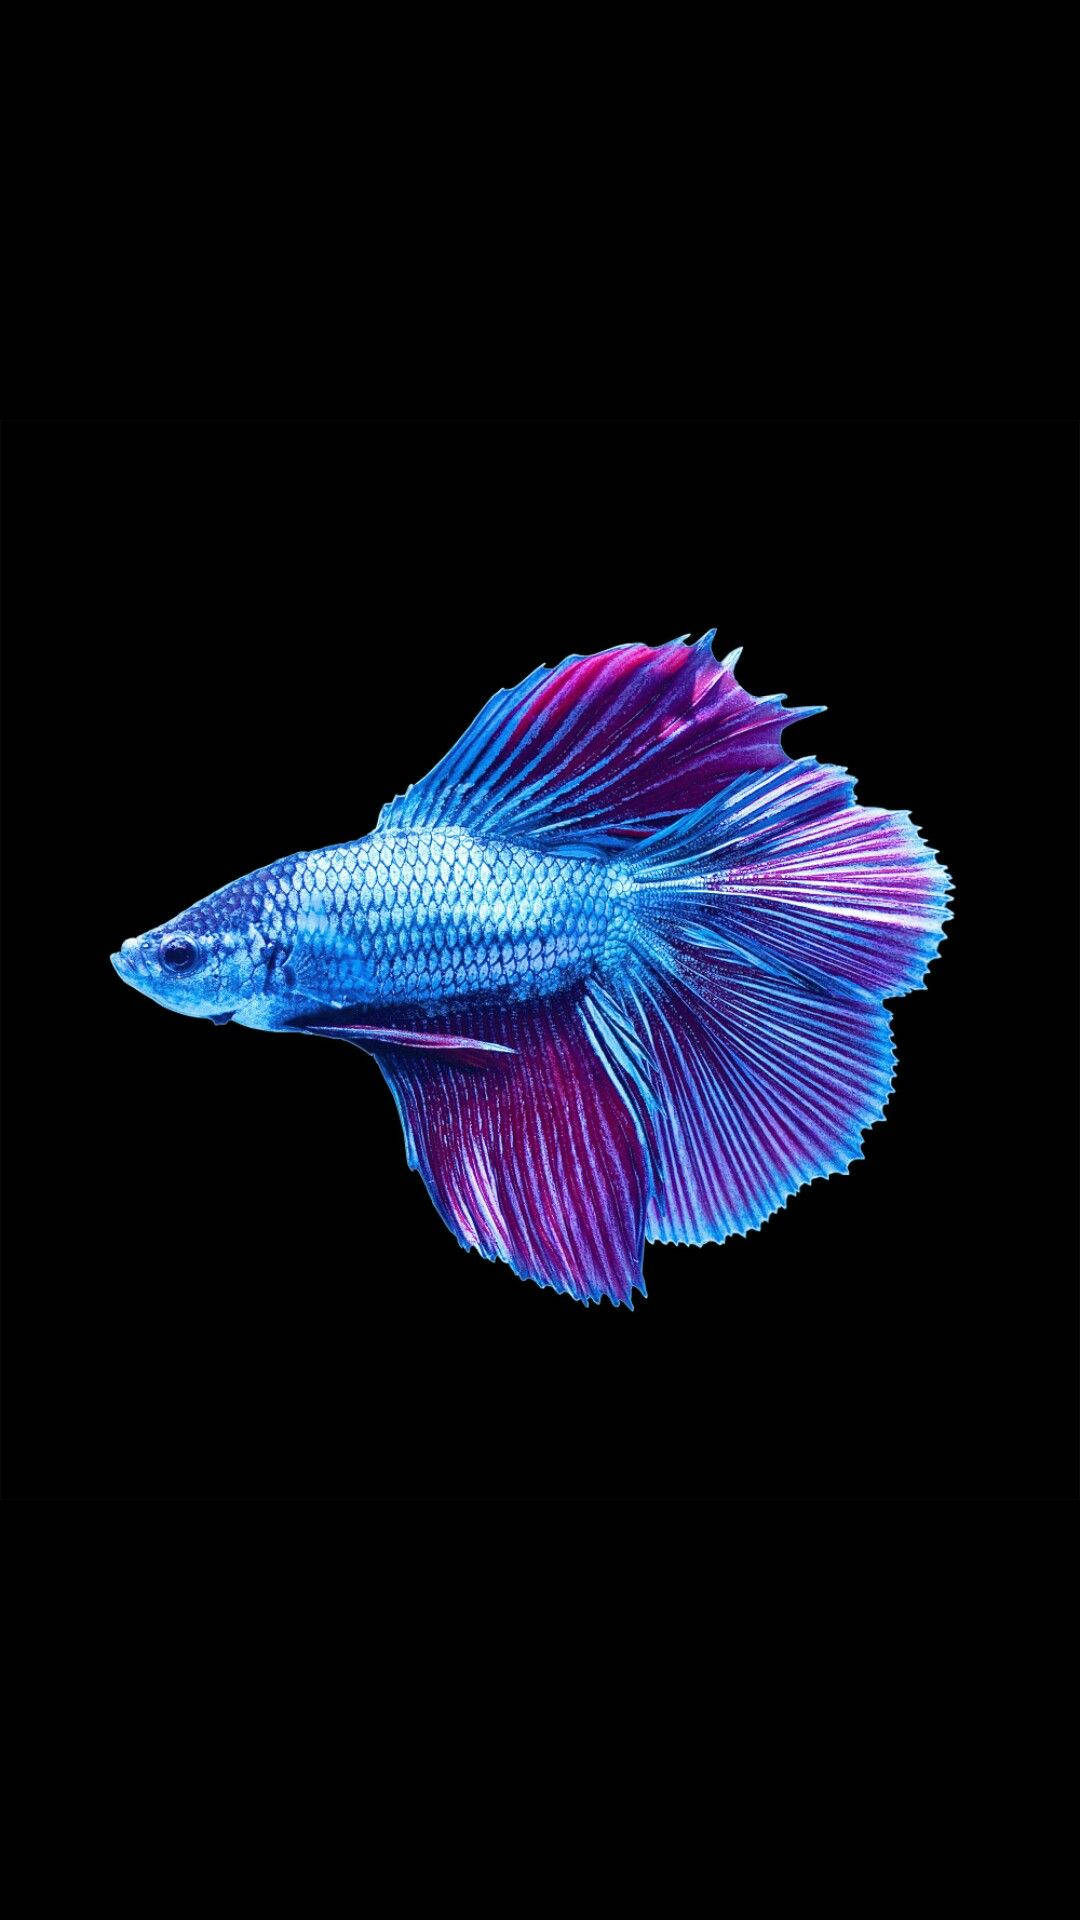 Cool Fish In Bluish-purple